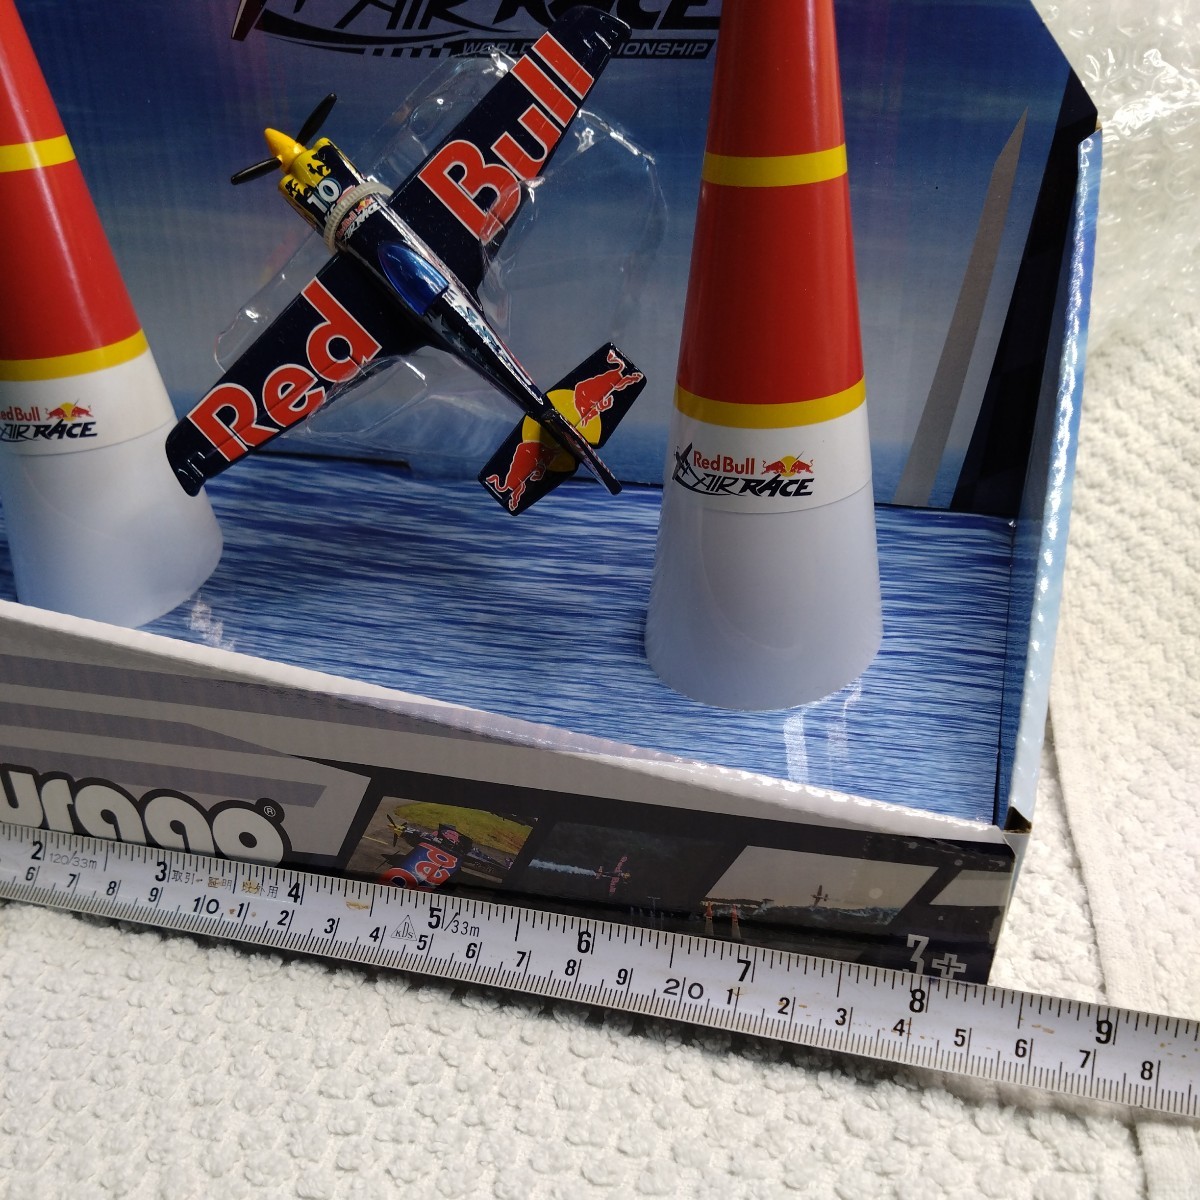 Red Bull Air Race Pylons Airplane Model Diecast Set 1/100 Scale Bburago Damaged レッドブル ブラーゴ エアーレースの画像9